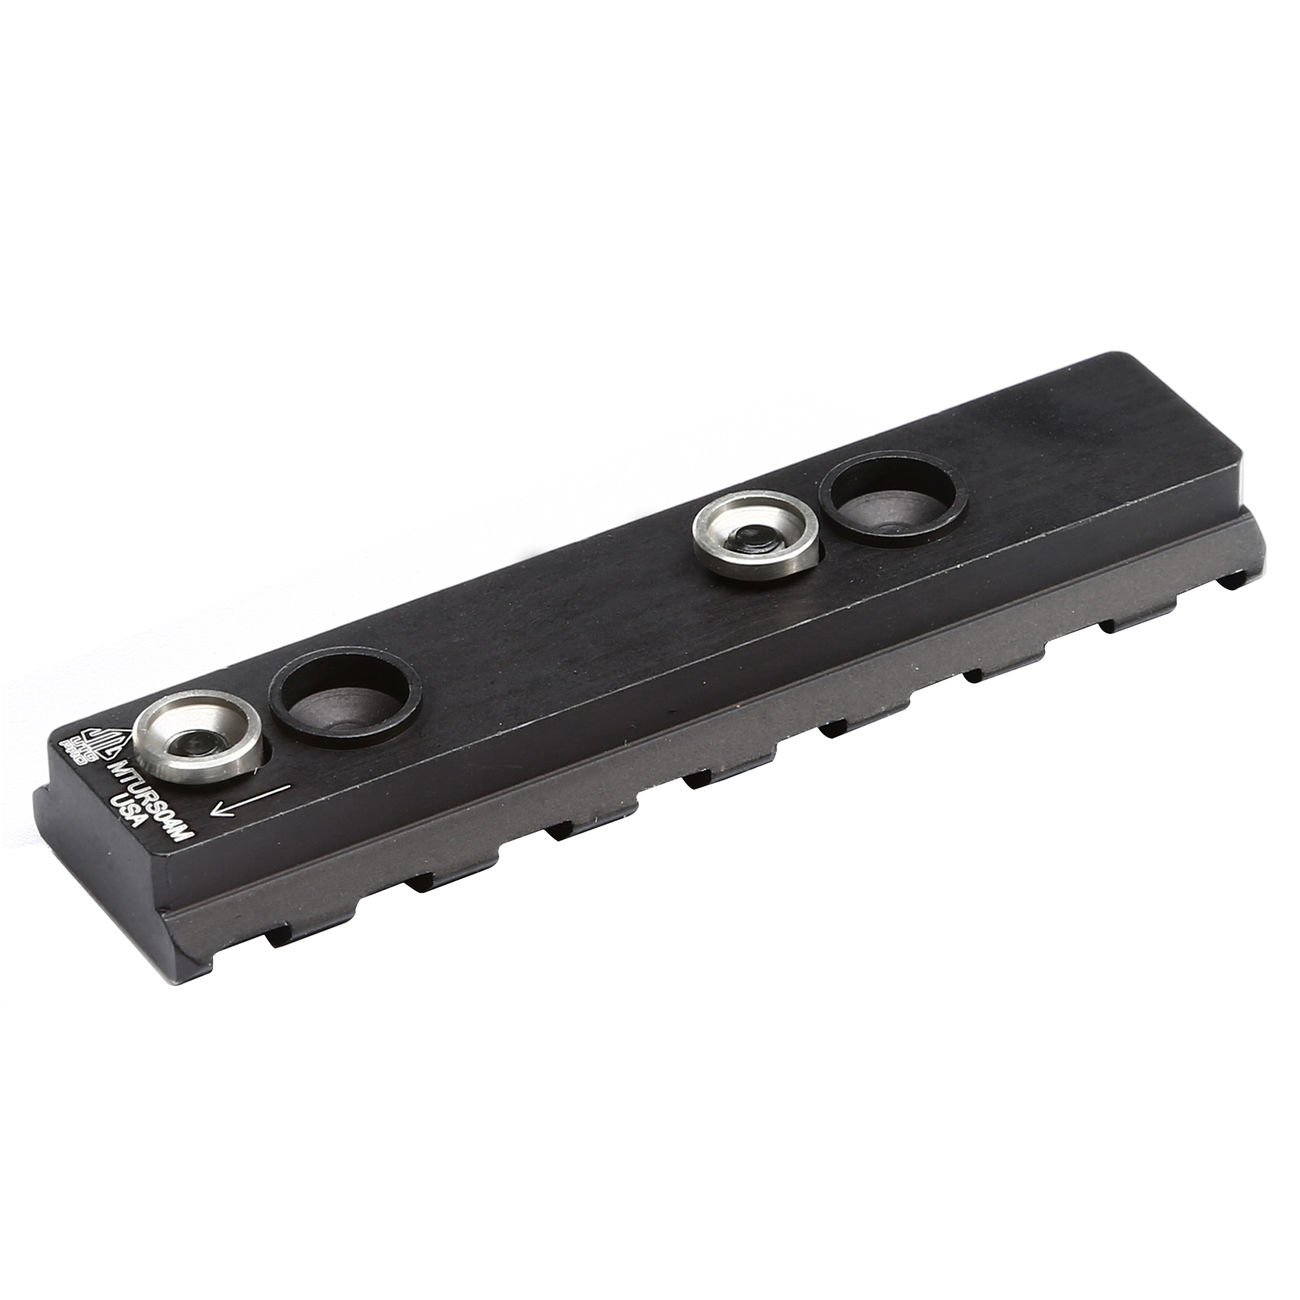 UTG Pro KeyMod 21mm Aluminium Schiene 8 Slots / 80 mm / 3.14 Zoll schwarz Bild 2